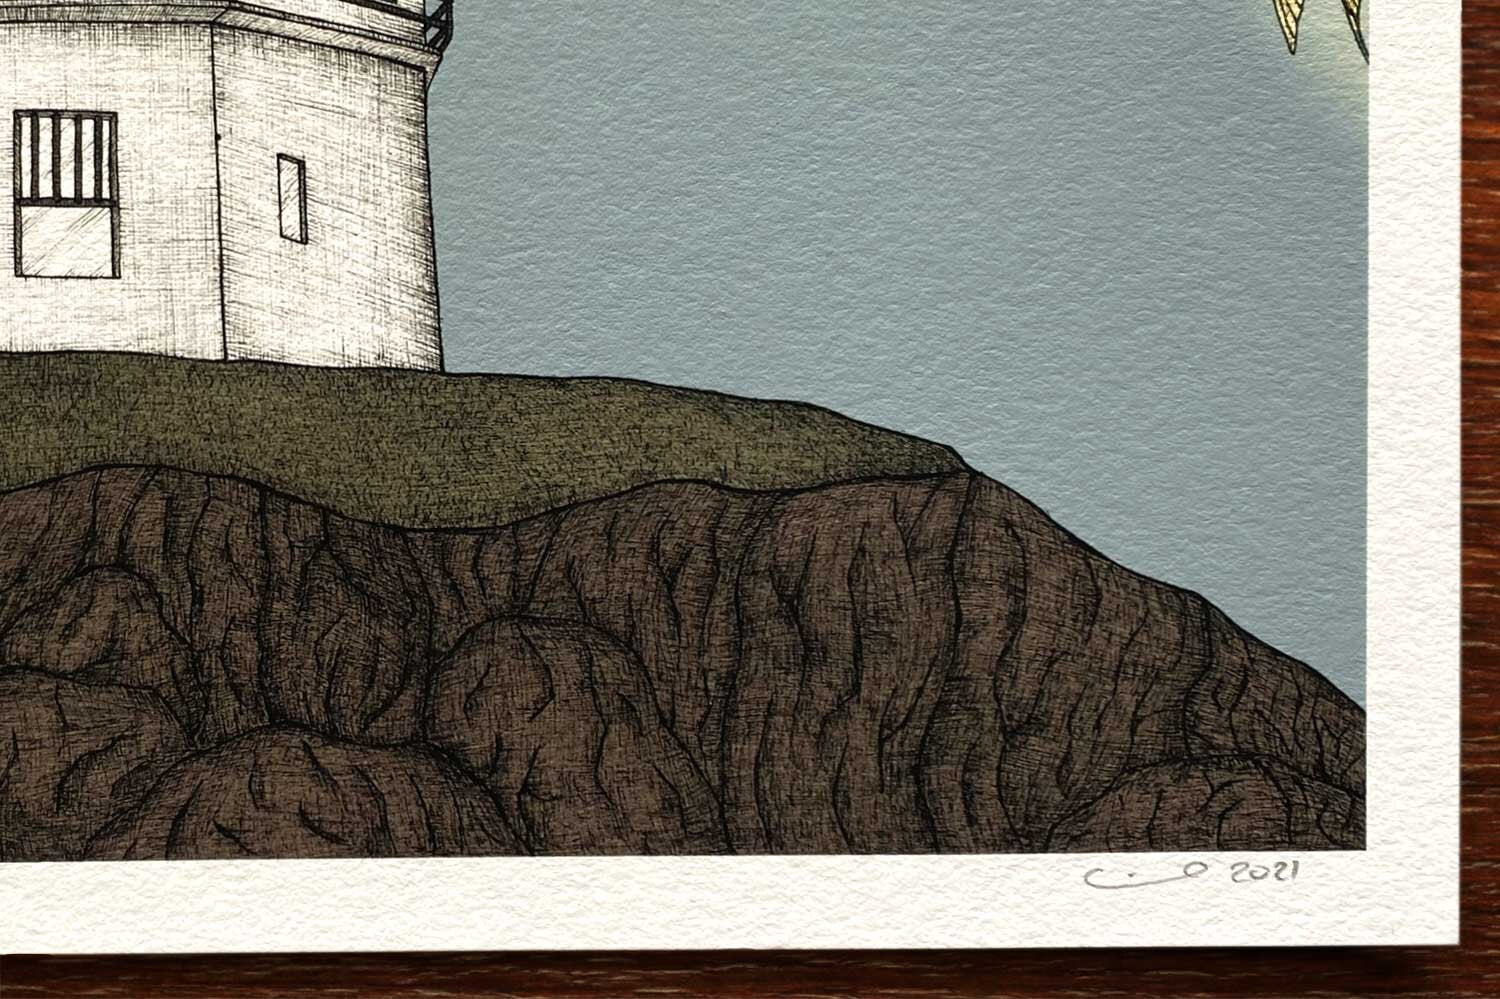 The Lighthouse- Art Print